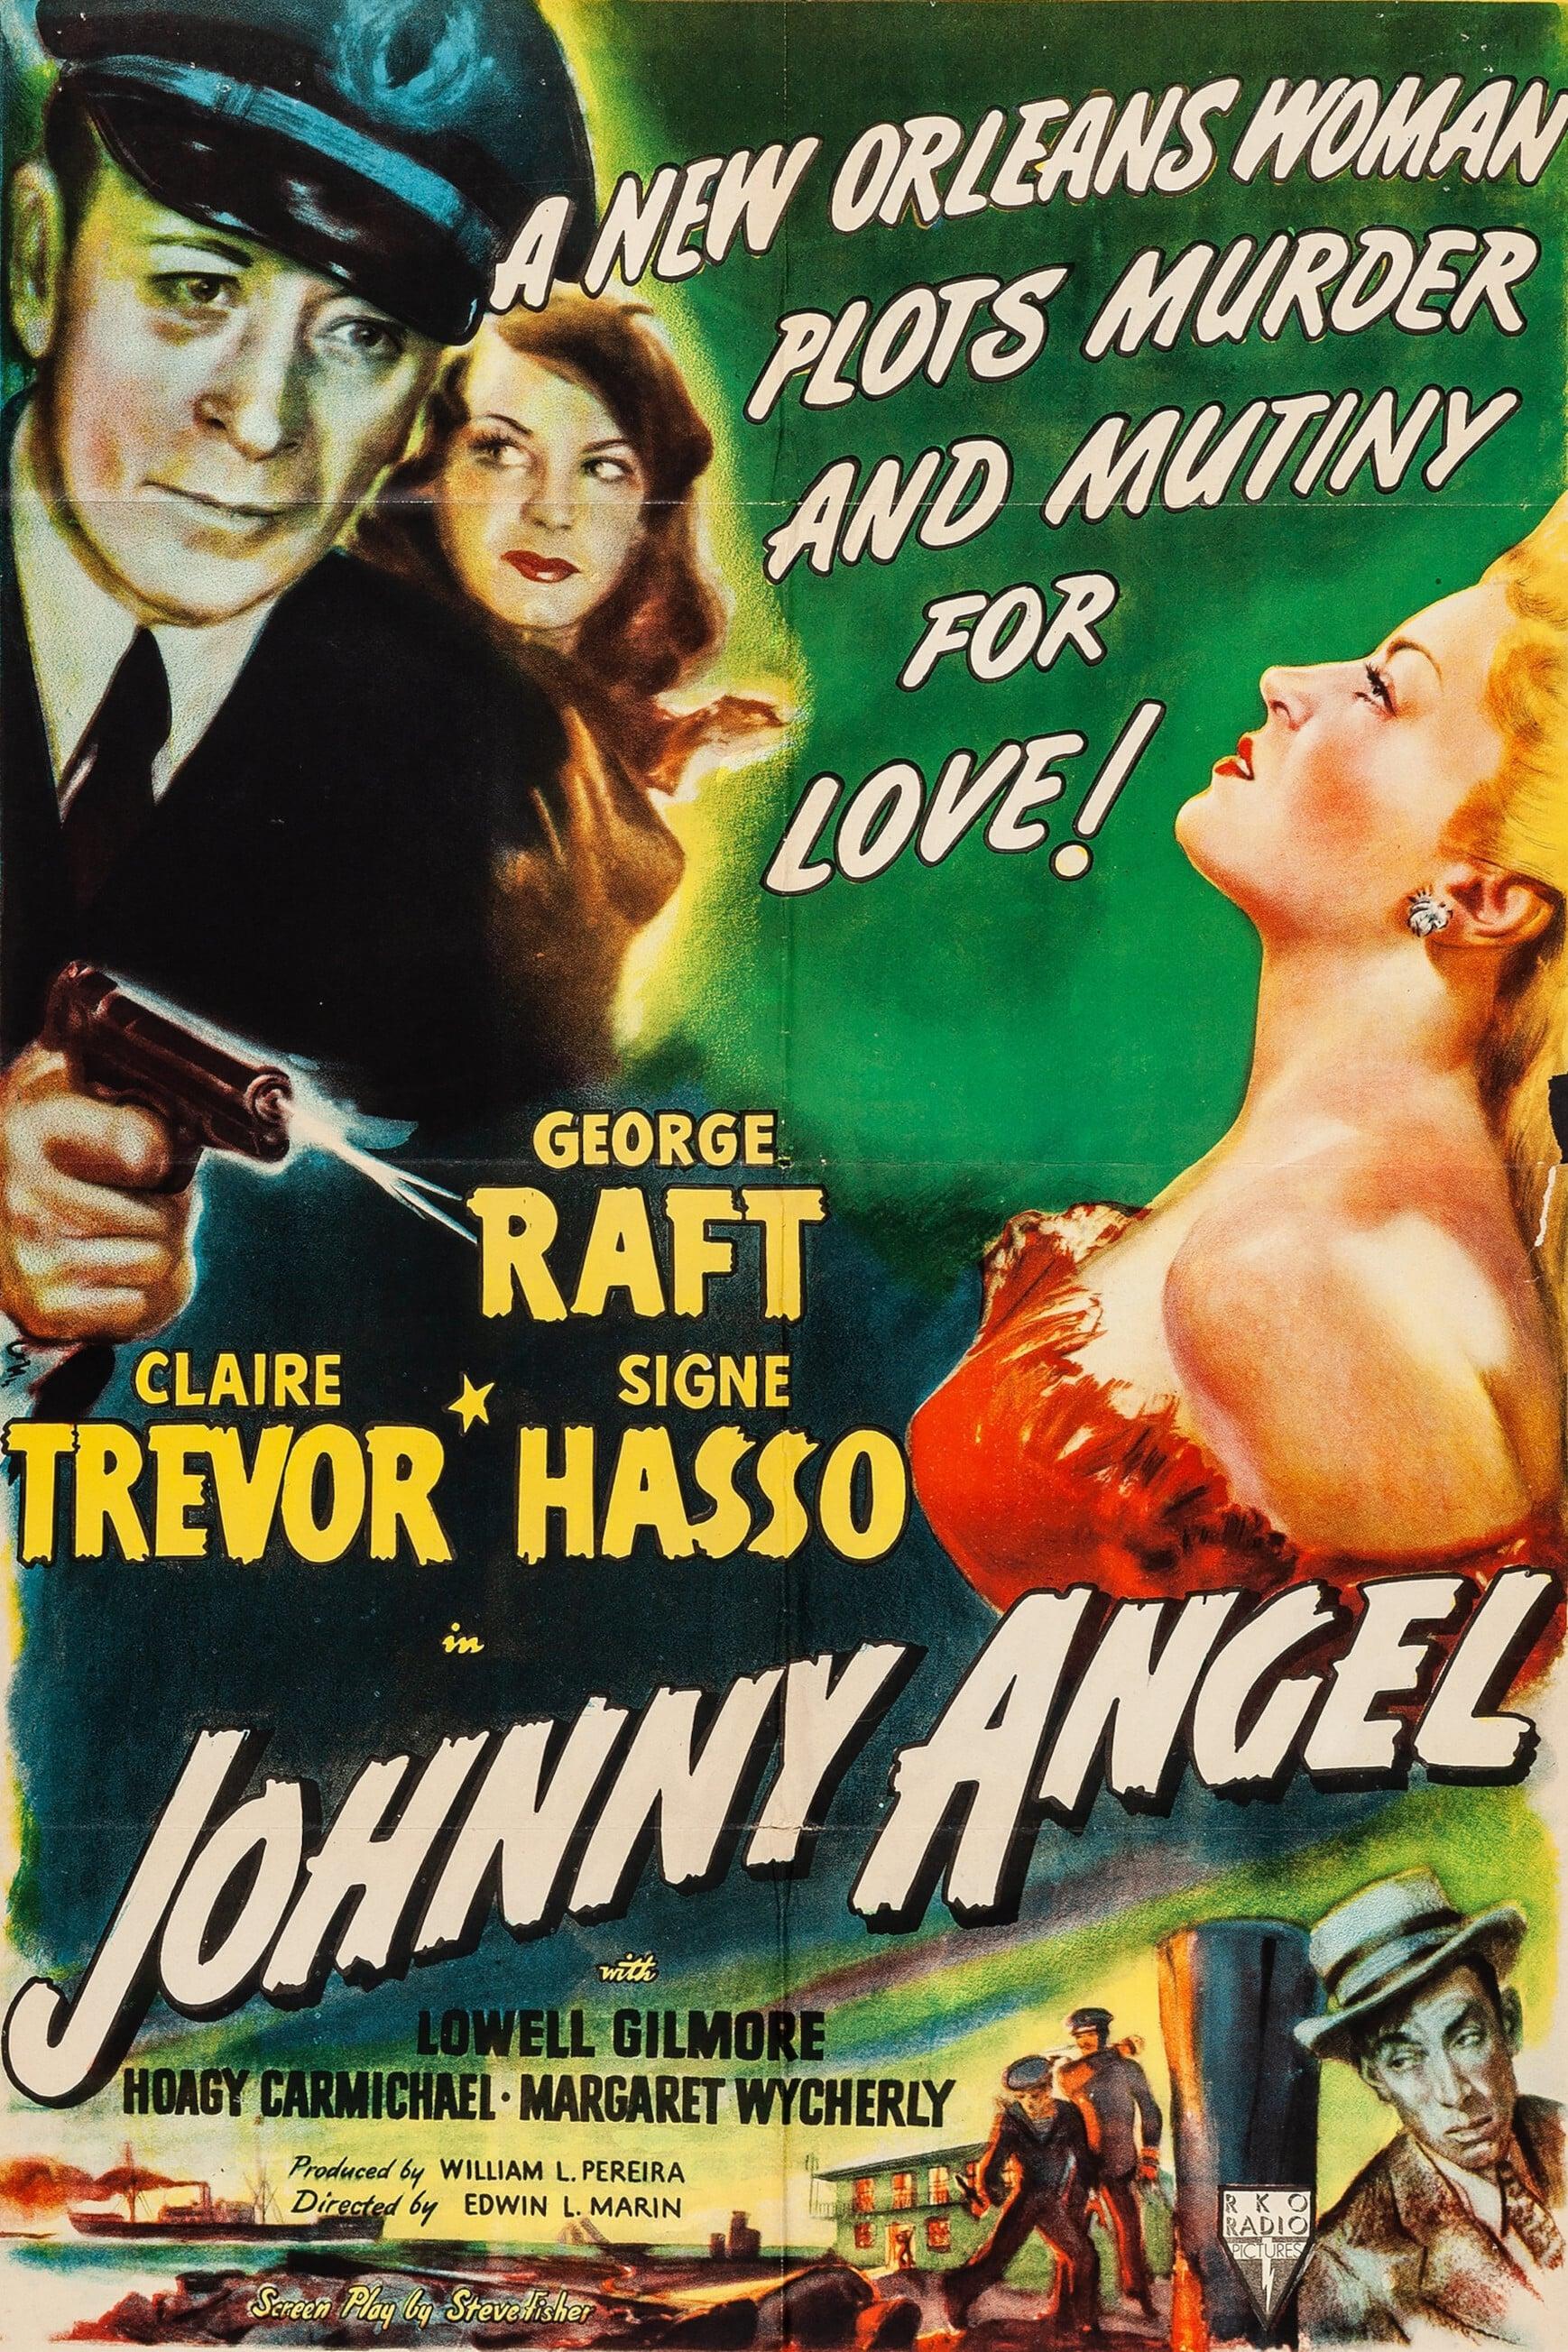 Johnny Angel poster